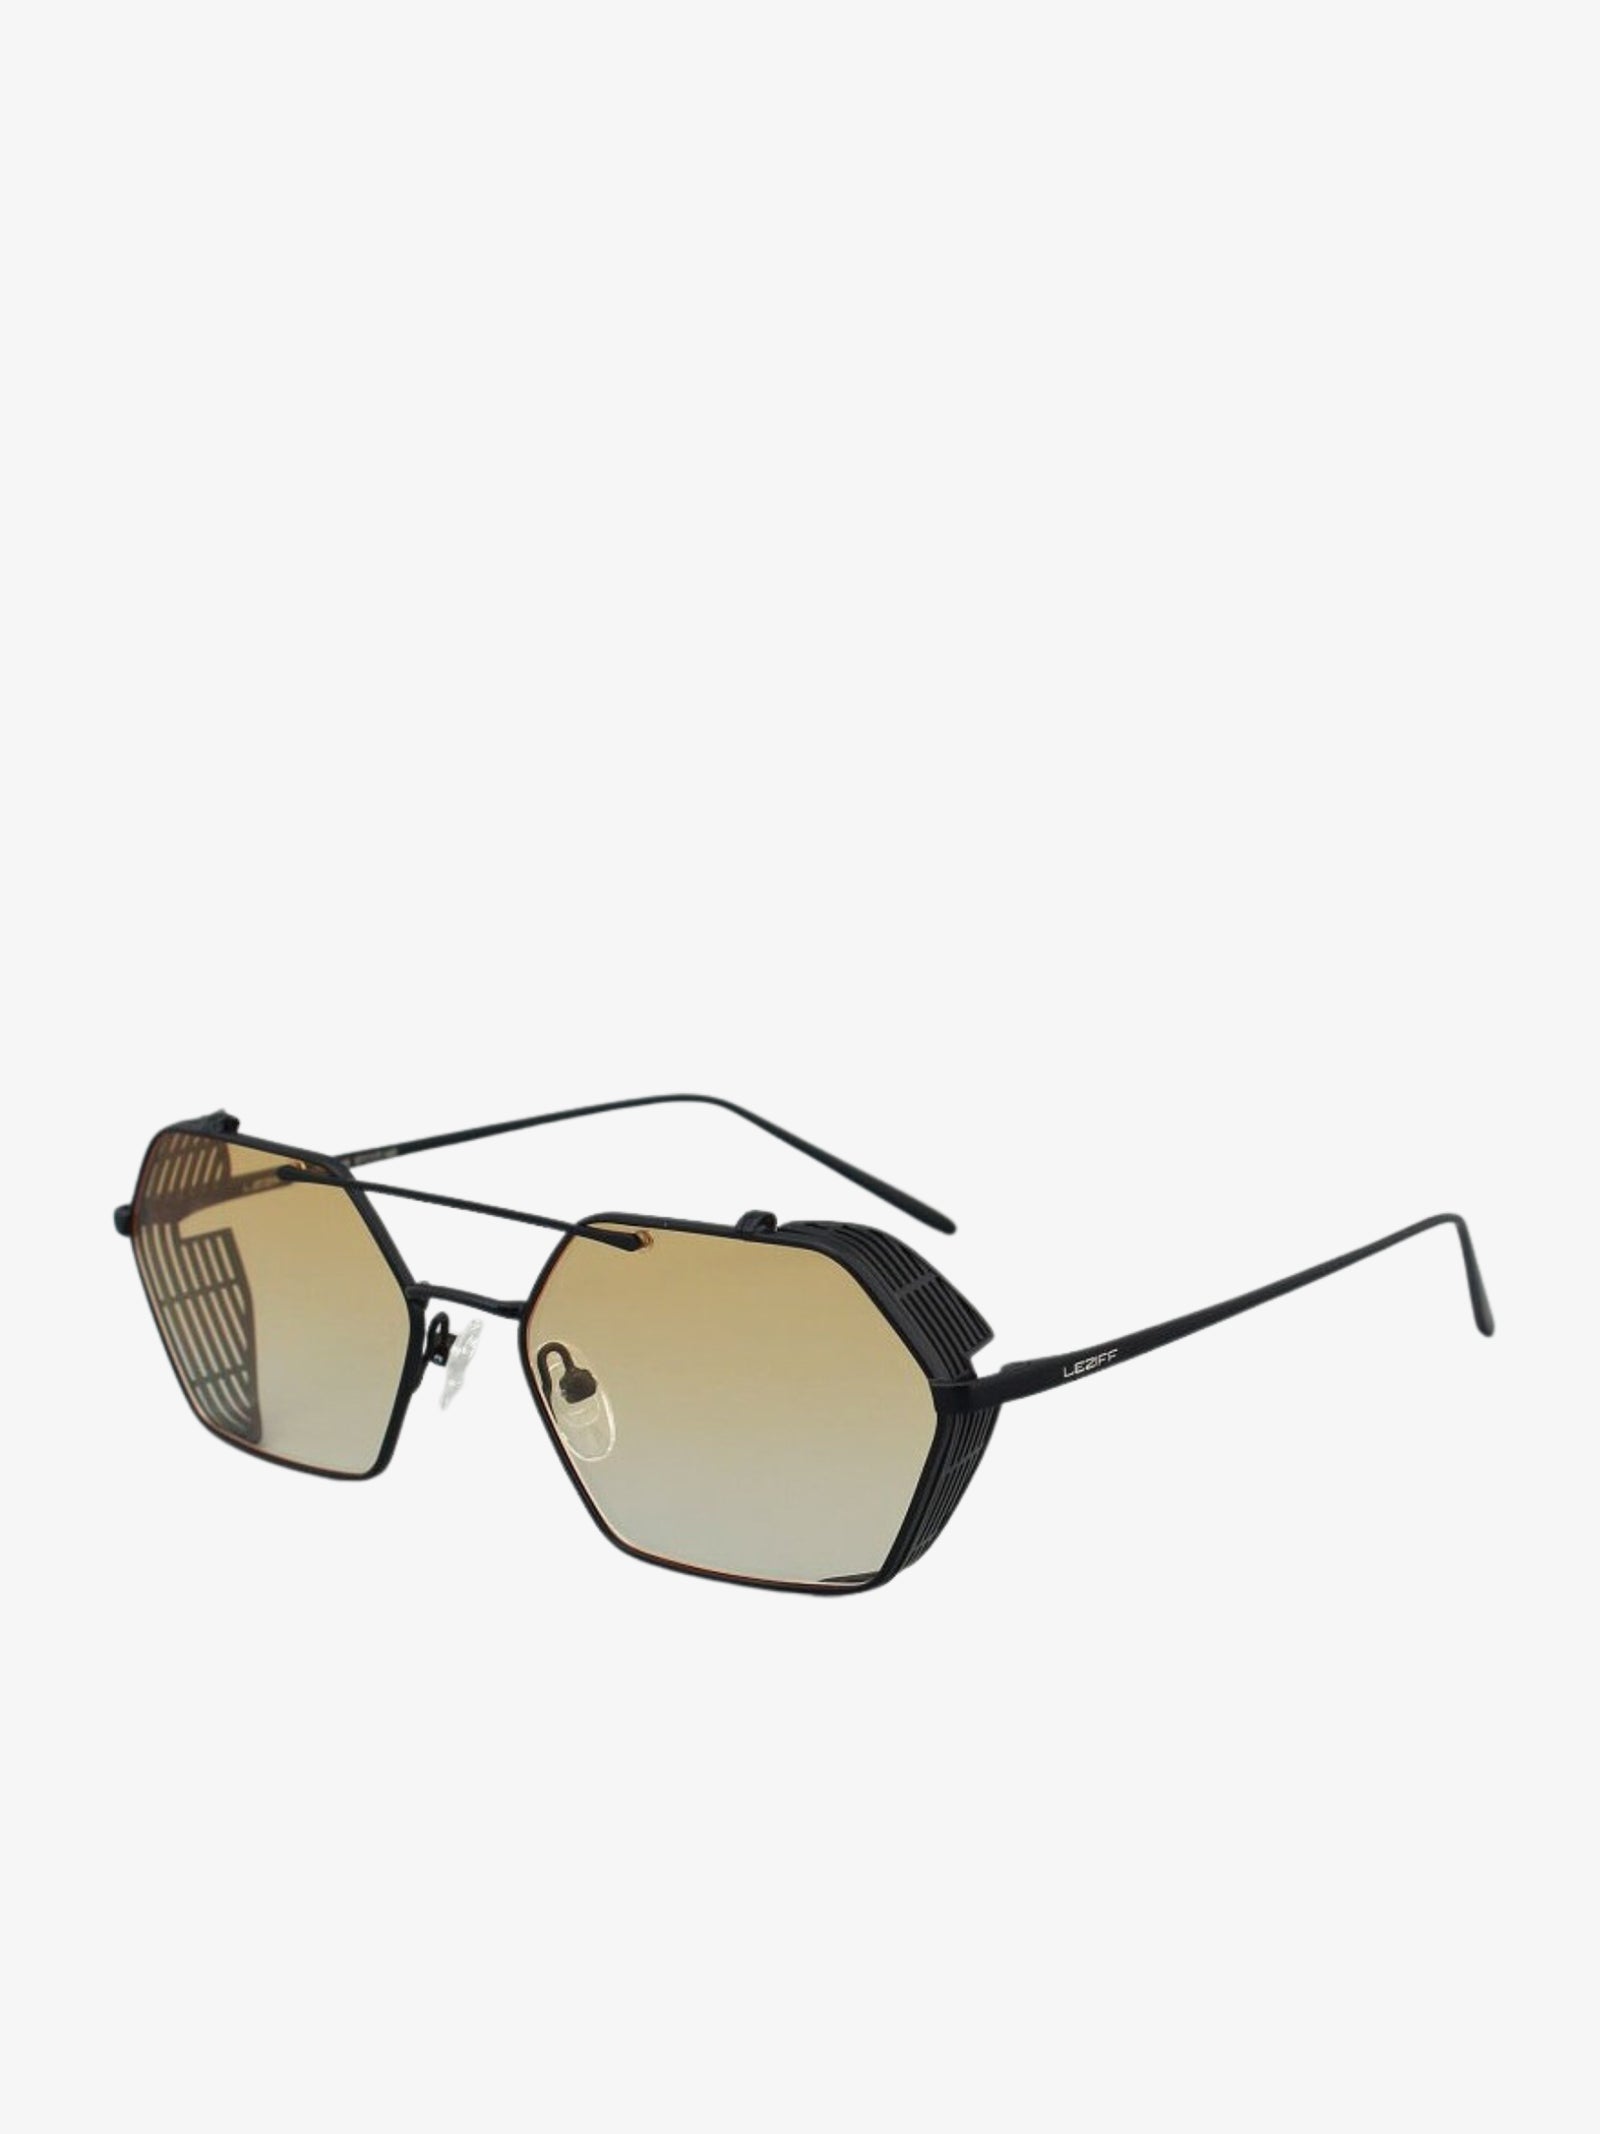 Leziff Men's Las Vegas Sunglasses